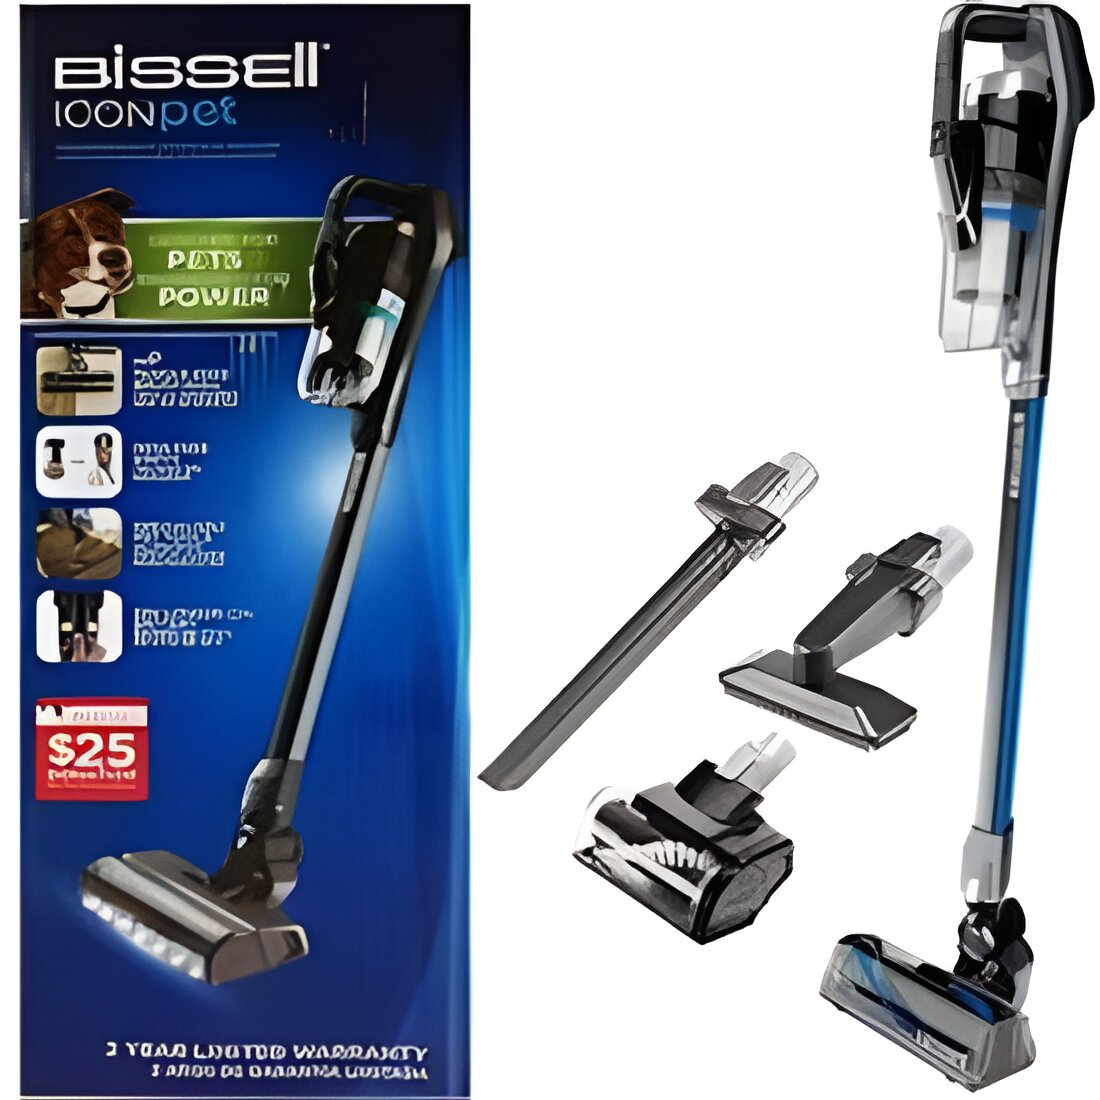 Free Bissell Cordless Vacuum